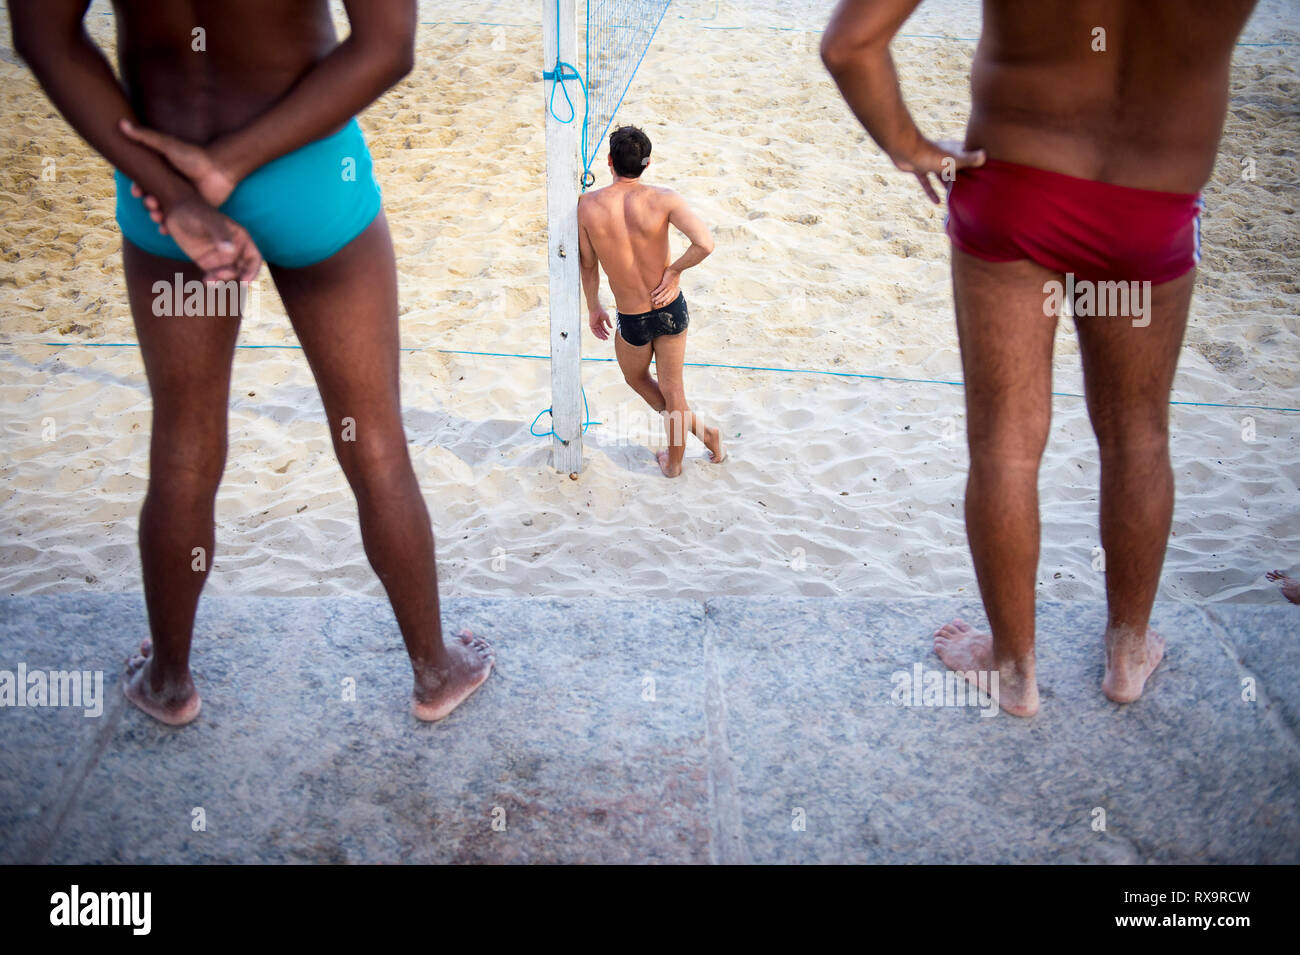 Unrecognizable young men stand on the beach in sunga, a local style of  swimwear popular in Rio de Janeiro, Brazil Stock Photo - Alamy